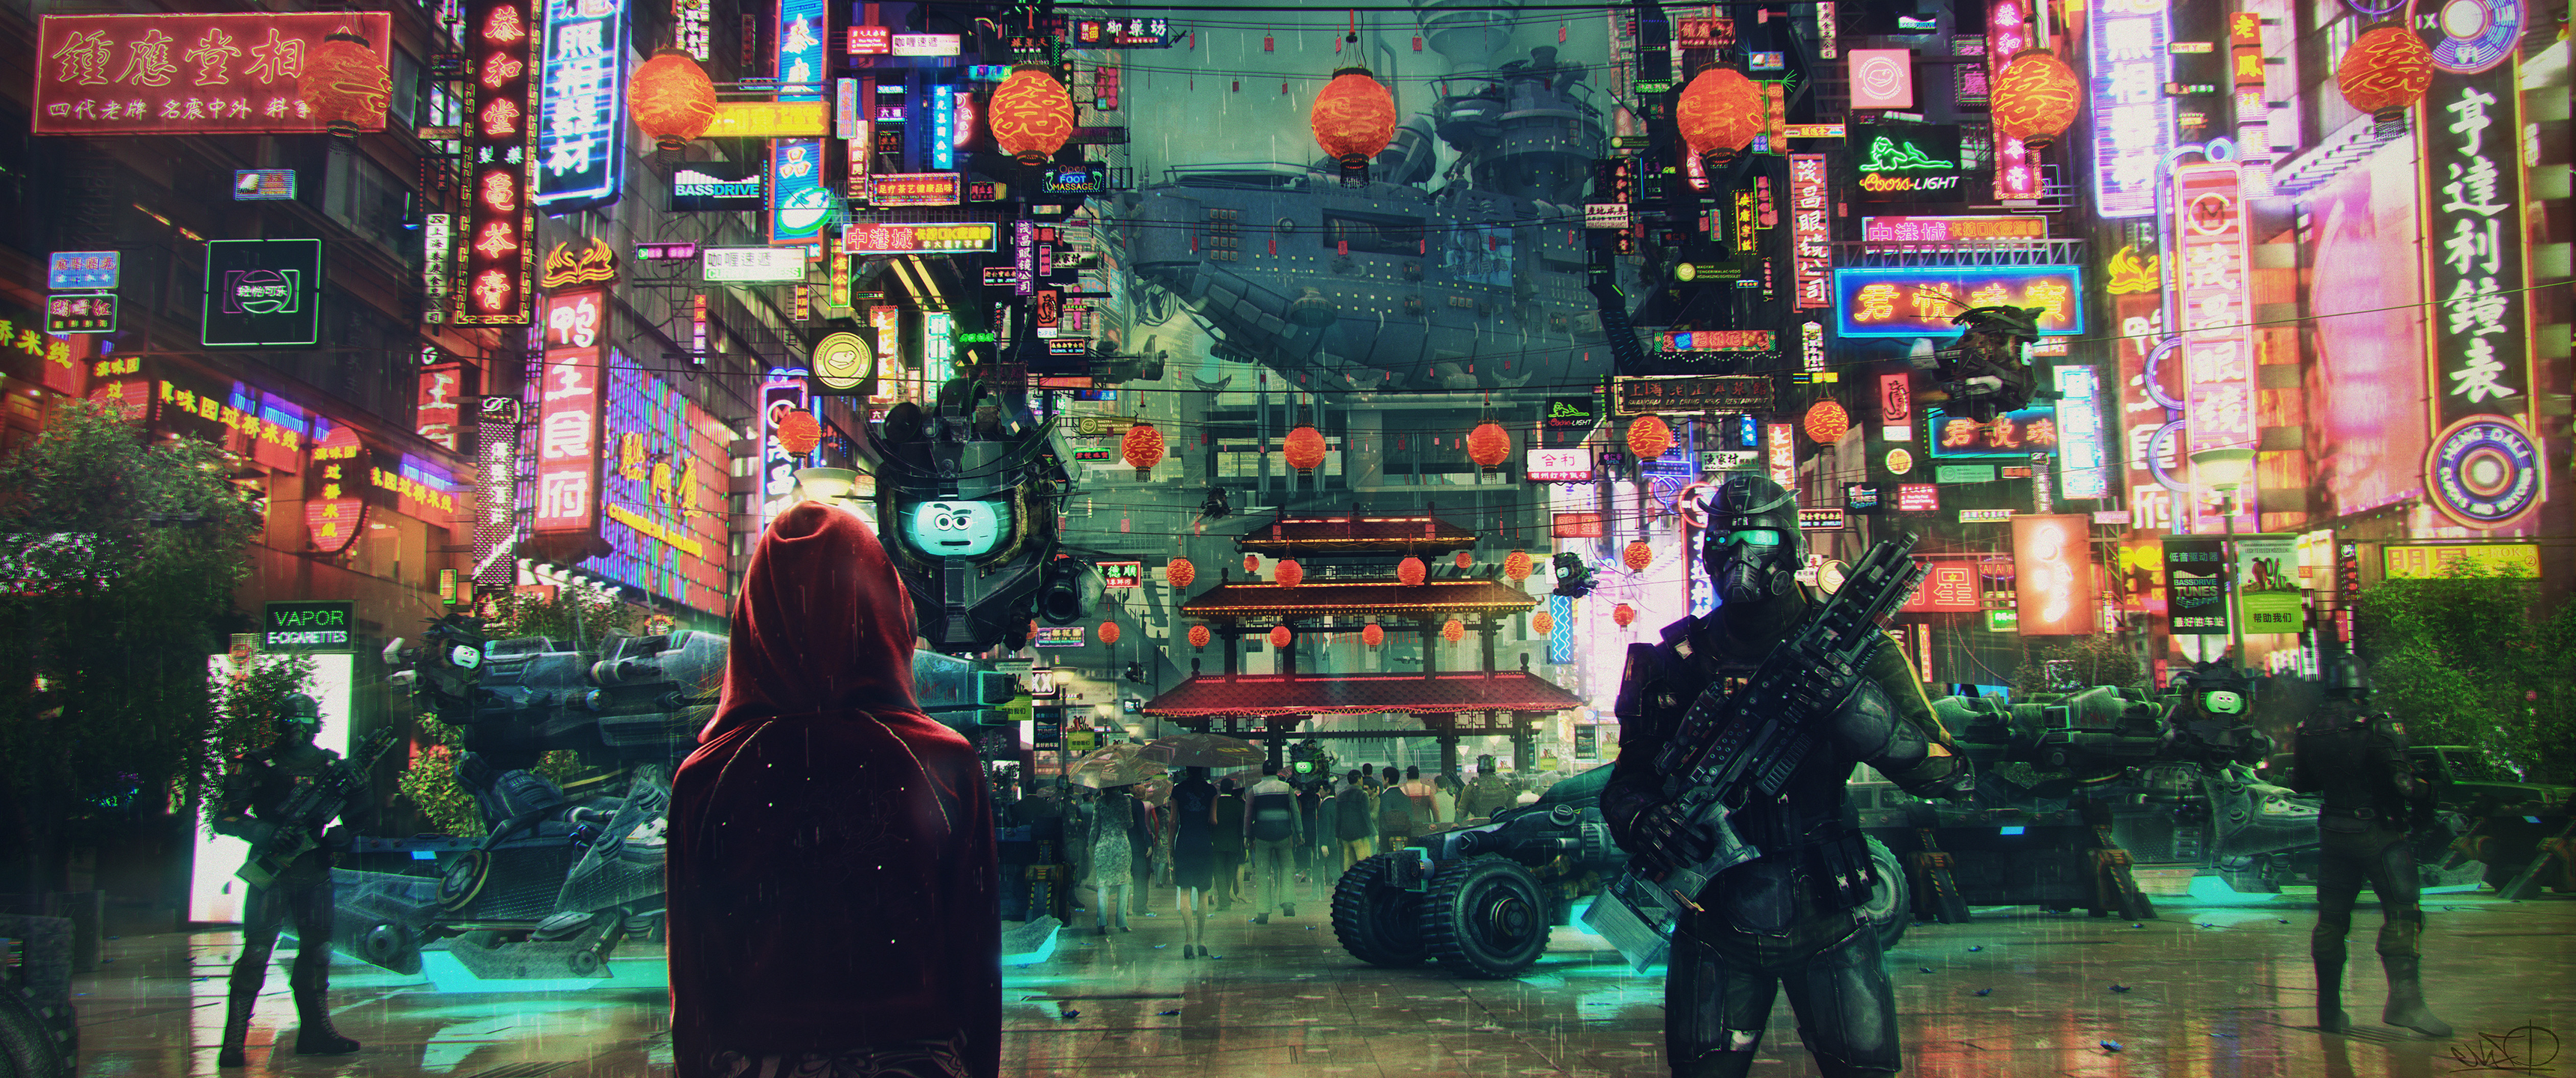 100+] 3440x1440p Cyberpunk 2077 Backgrounds